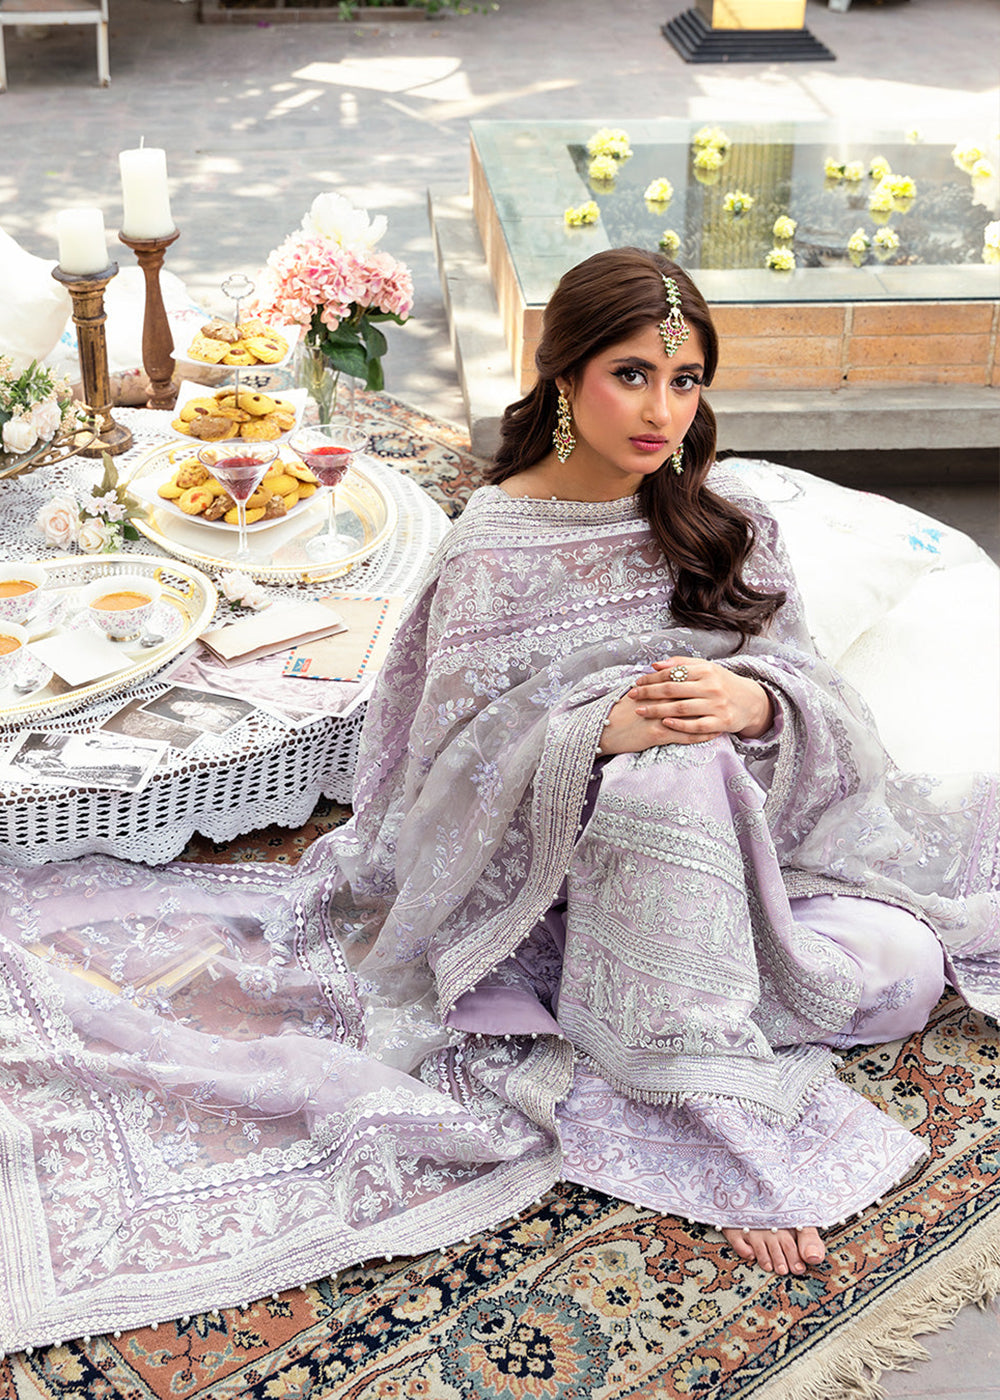 Buy Now Nira Wedding Collection 2023 by Faiza Saqlain | LIYAN Online in USA, UK, Canada & Worldwide at Empress Clothing. 